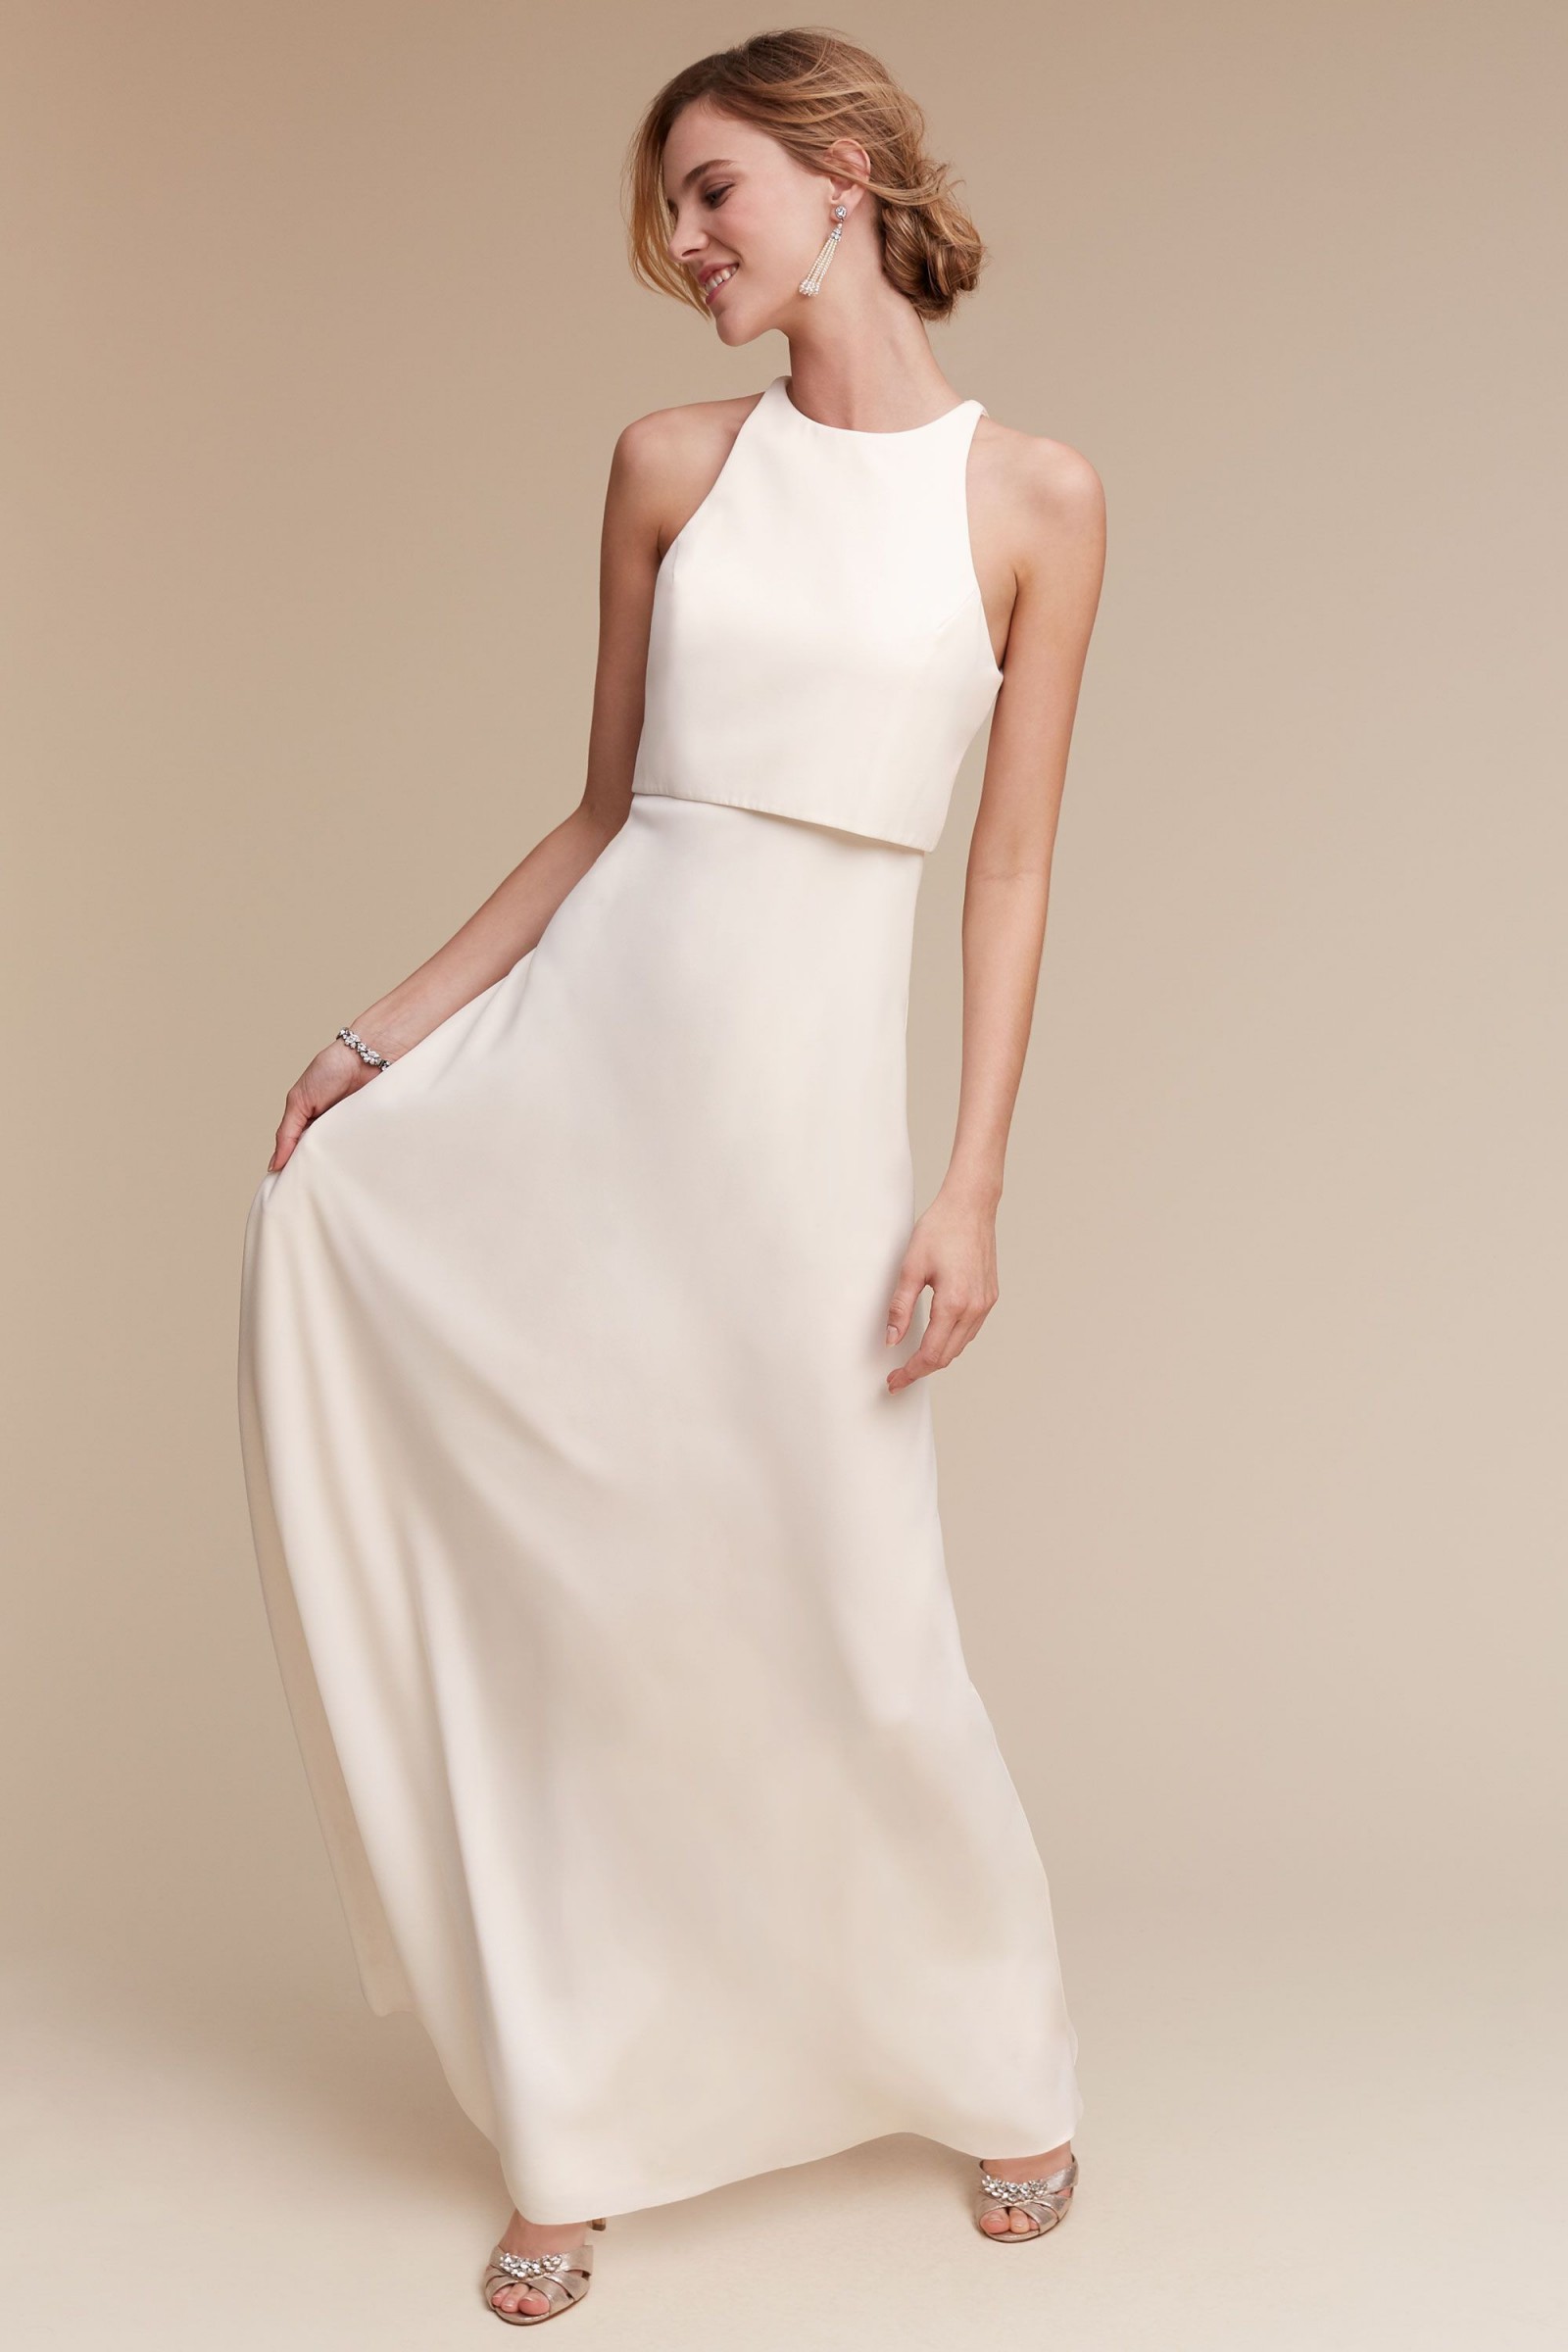 BHLDN Jill Stuart Iva Crepe Maxi New Wedding Dress Save 30 